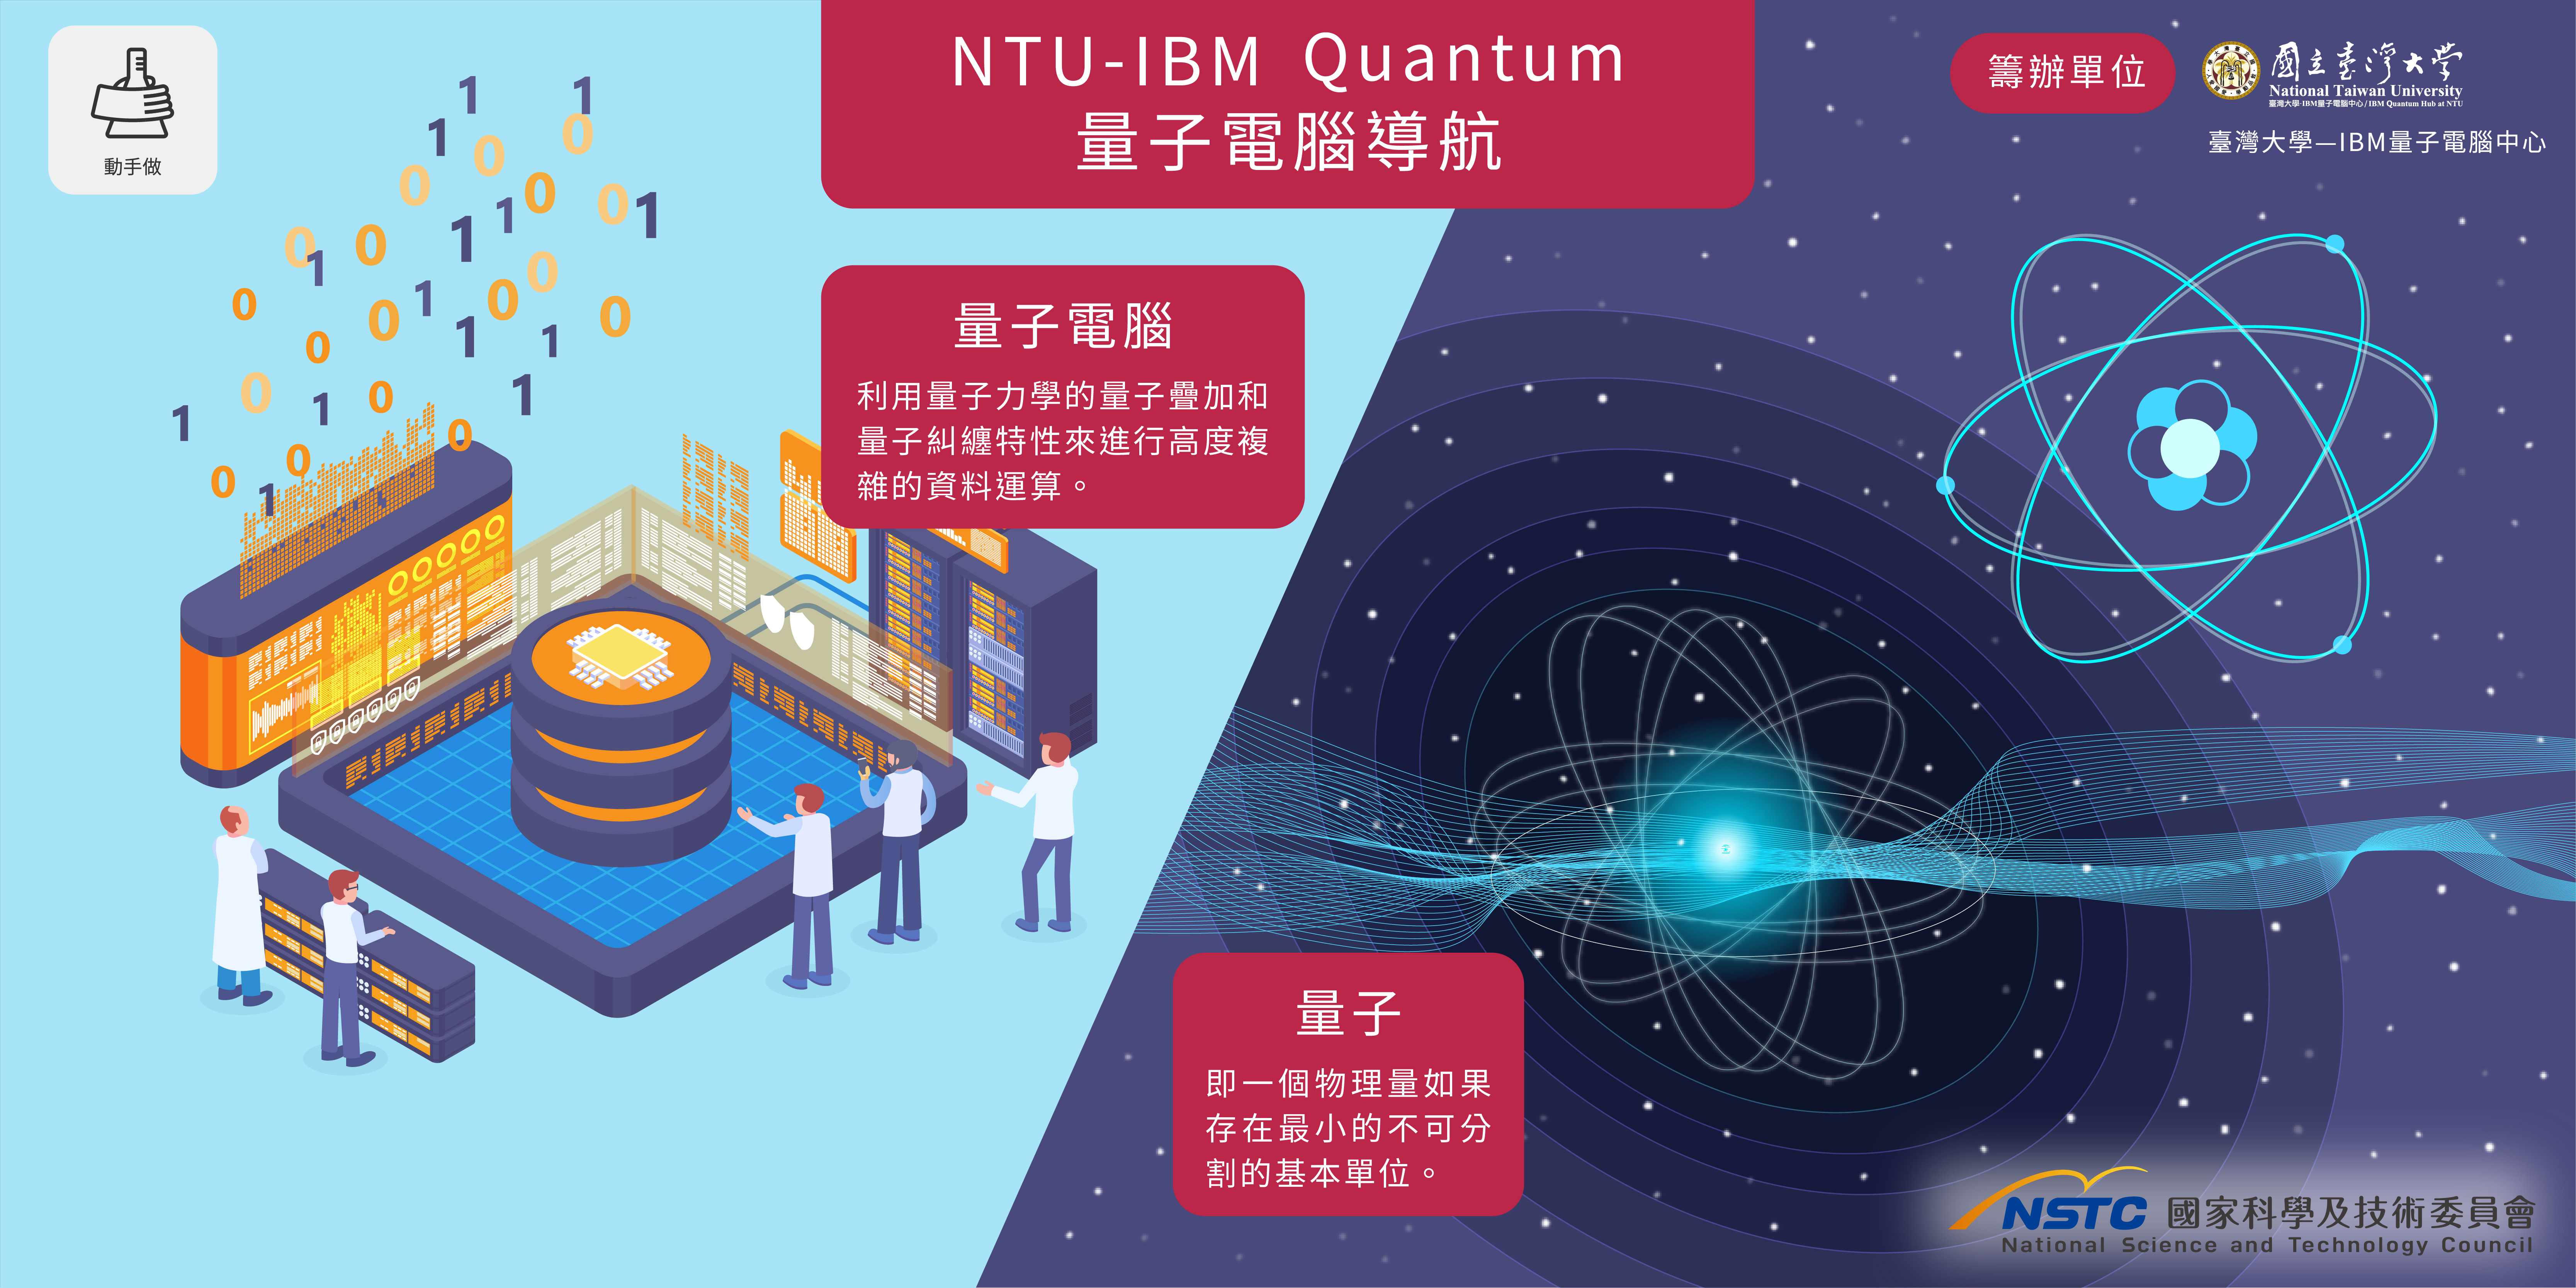  NTU-IBM Quantum 量子電腦導航